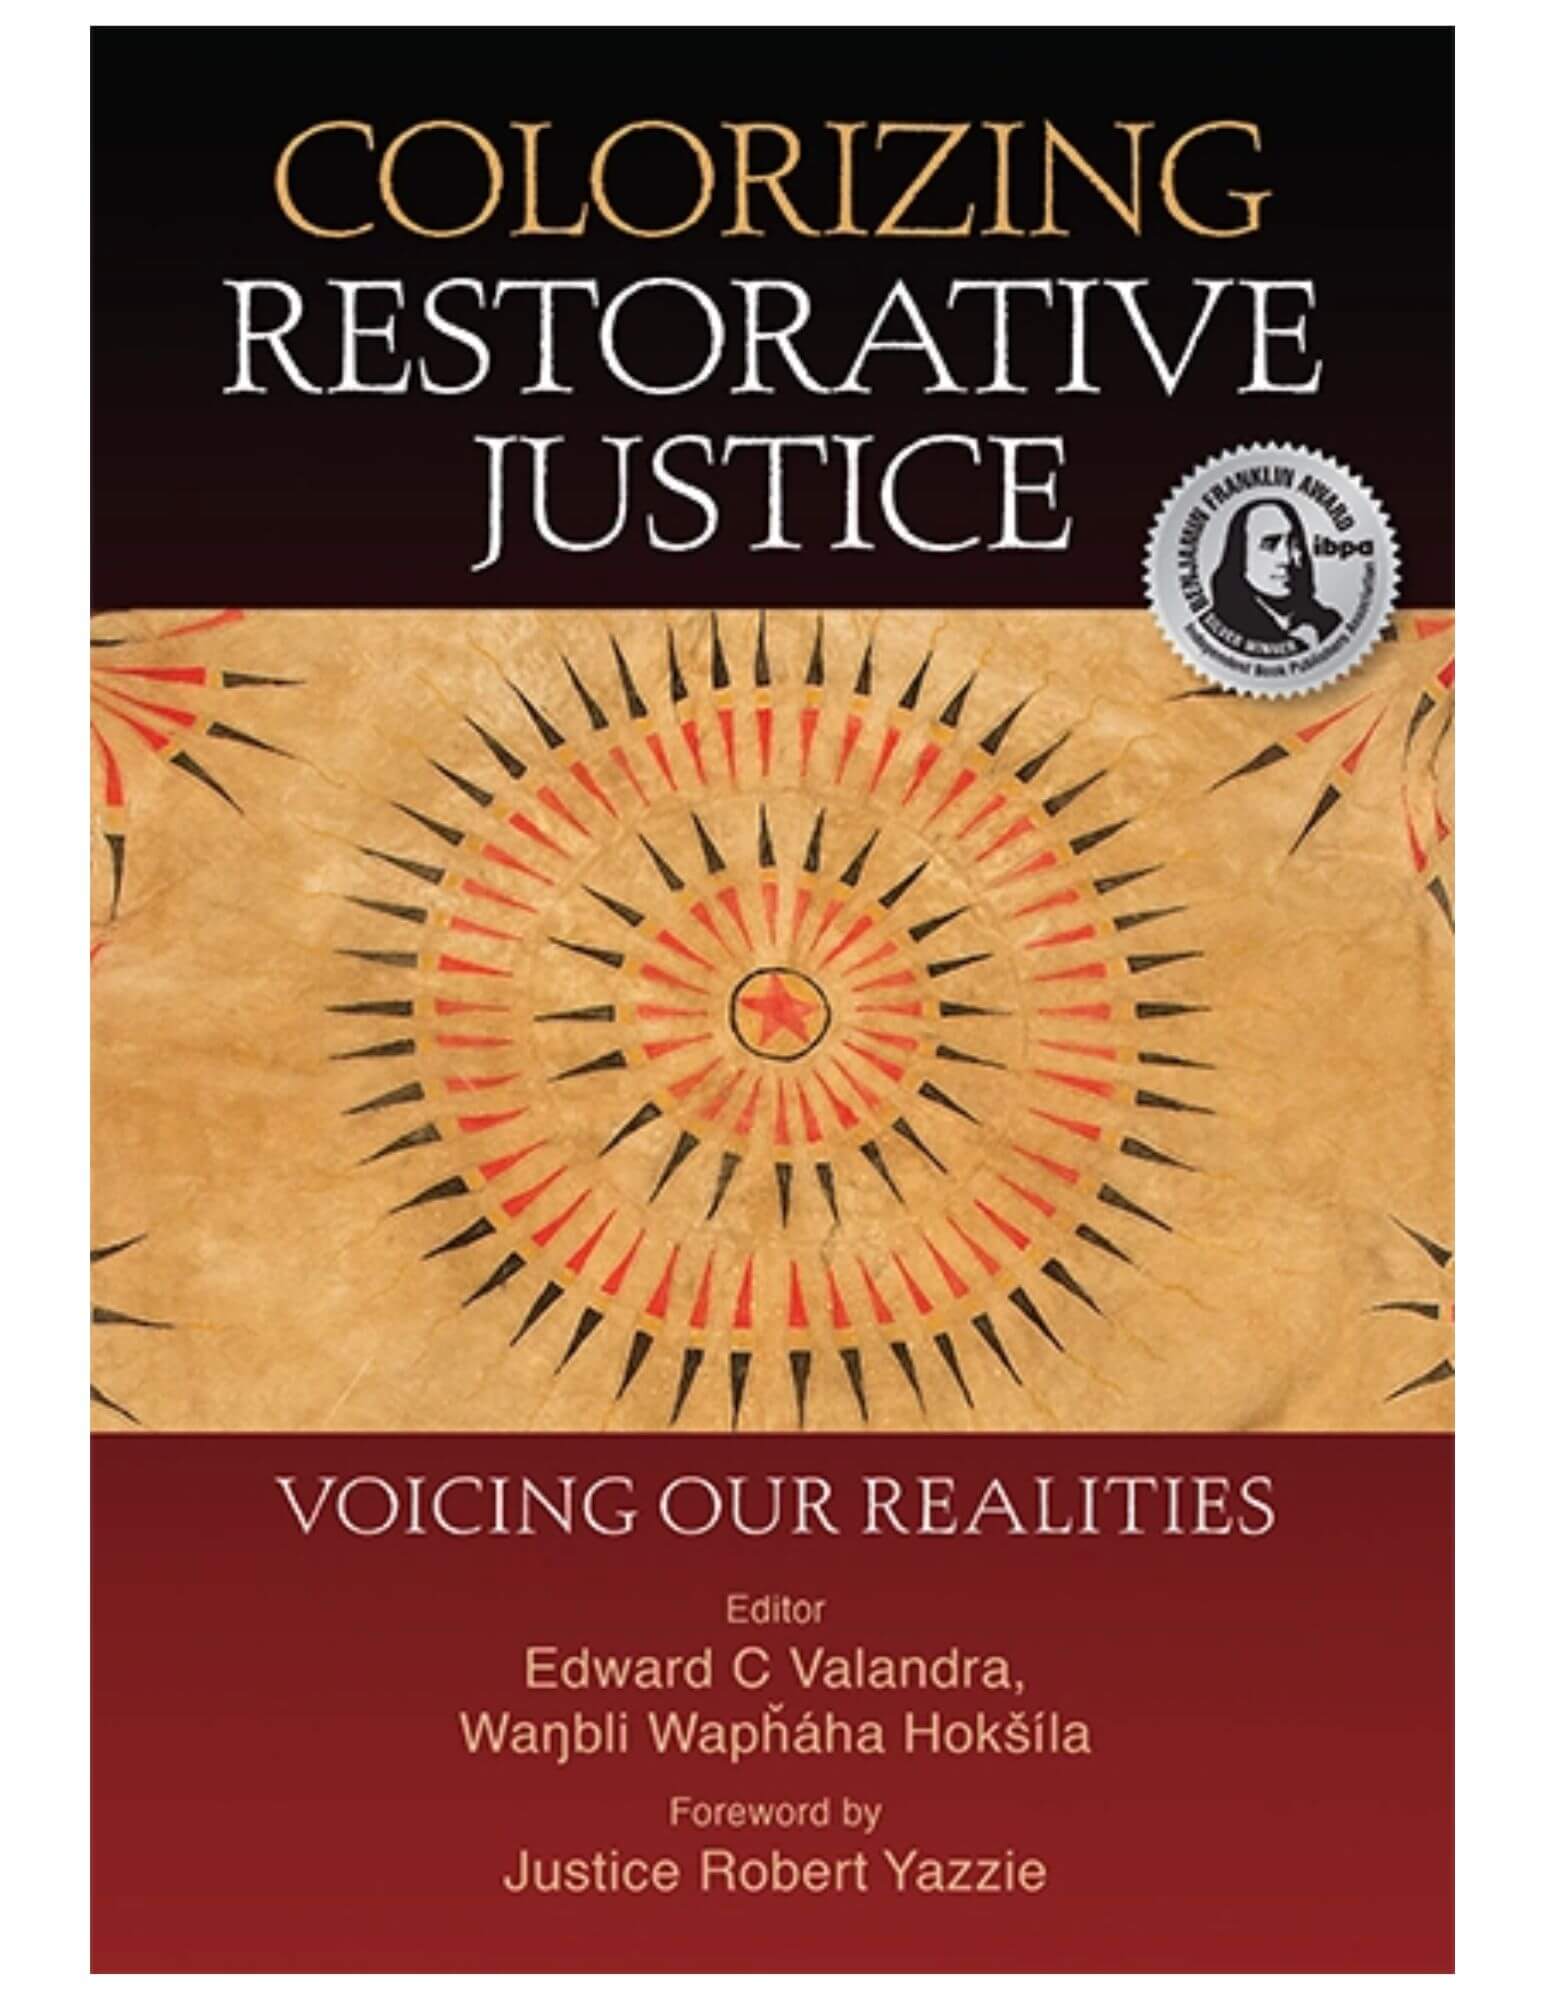 Colorizing Restorative Justice book cover